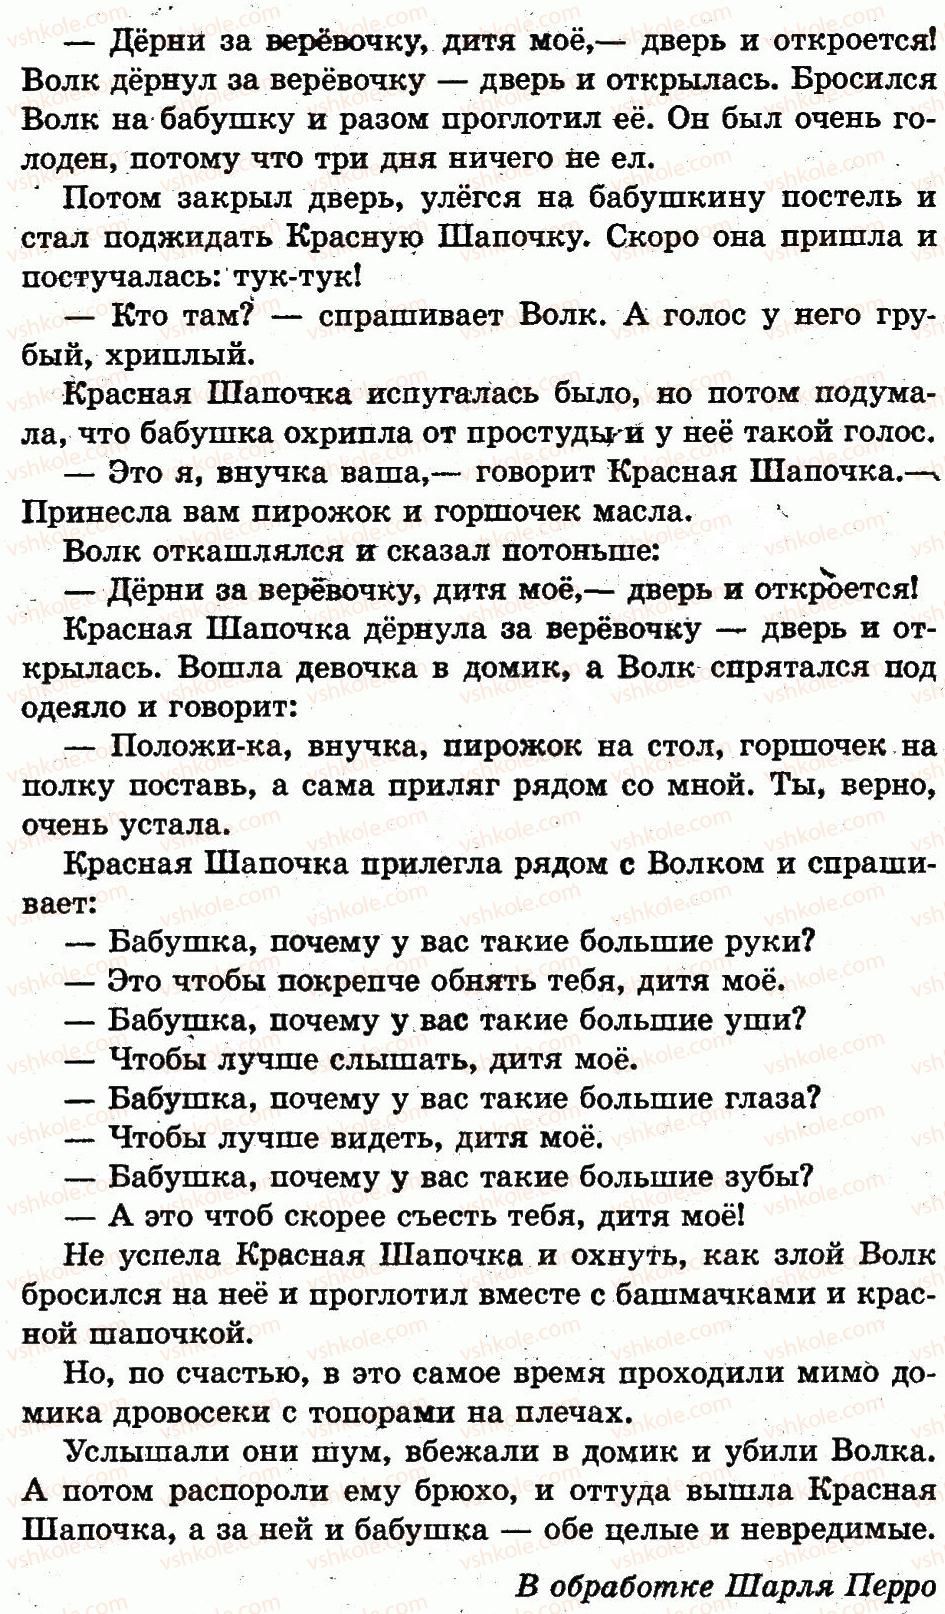 1-russkij-yazyk-in-lapshina-nn-zorka-2012--chelovek-страница114-rnd253.jpg